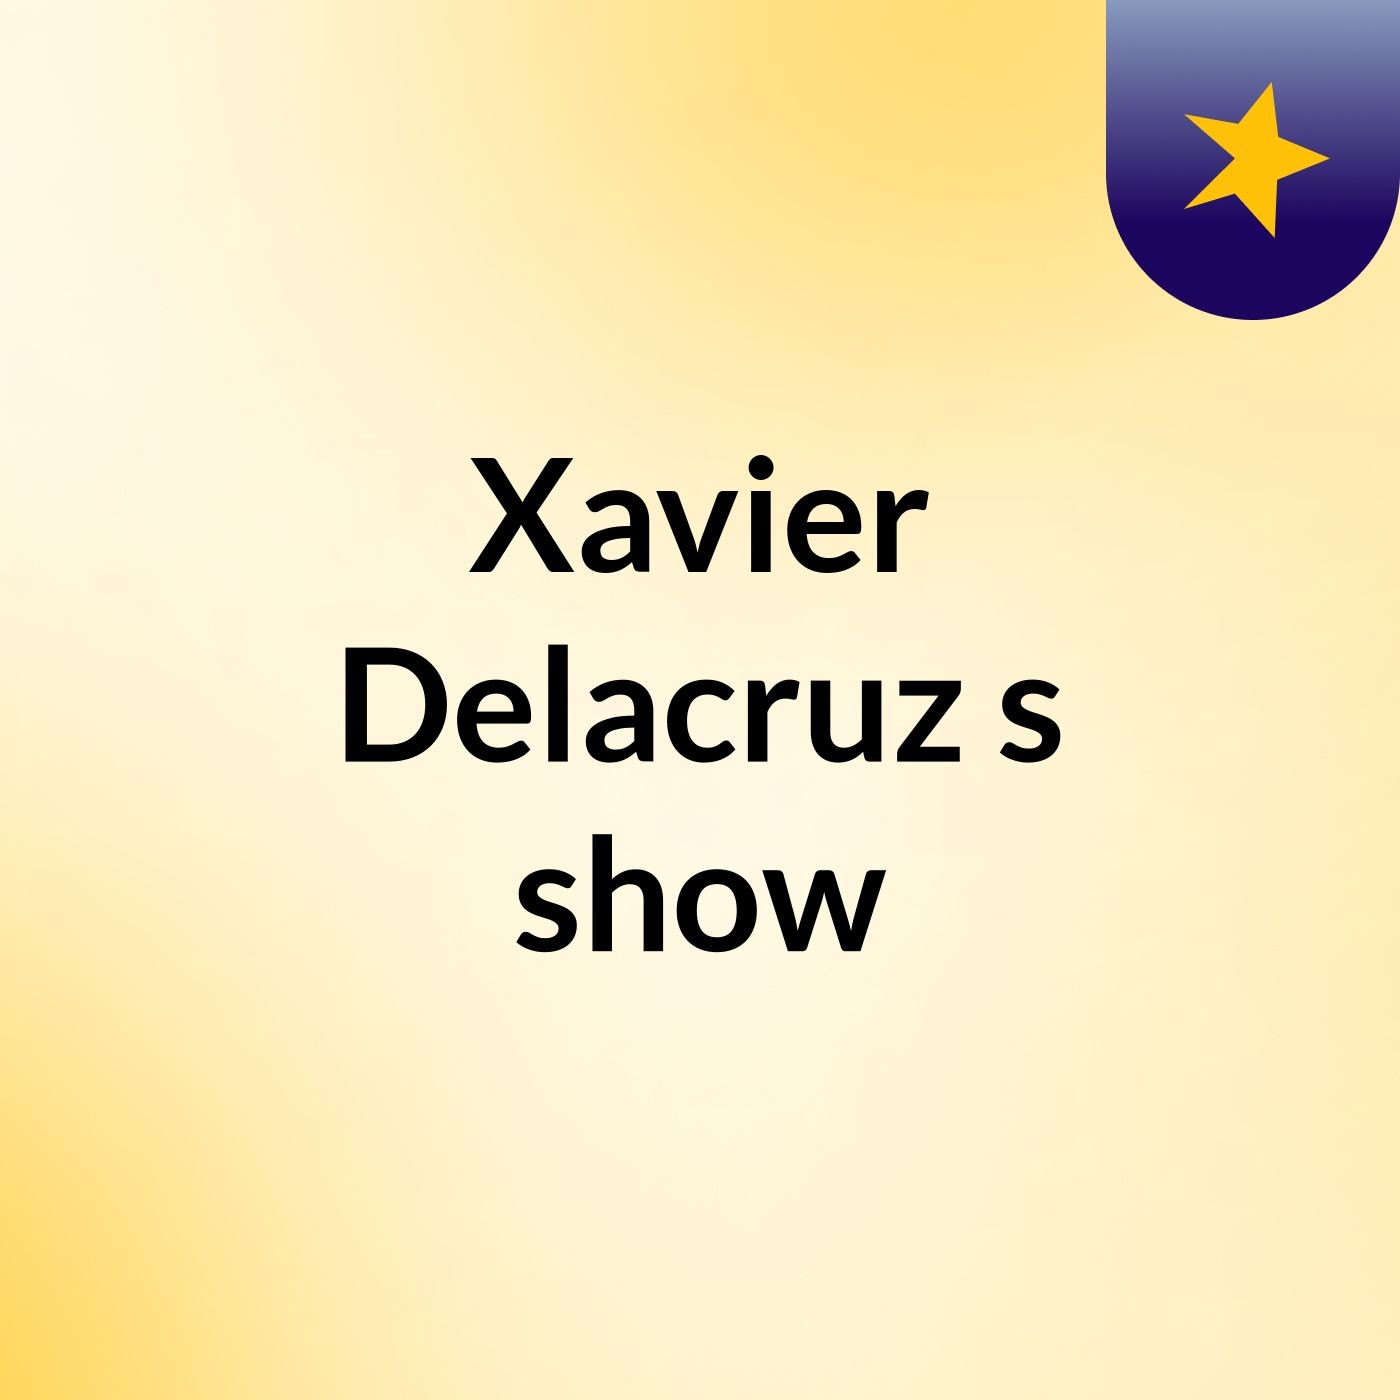 Xavier Delacruz's show